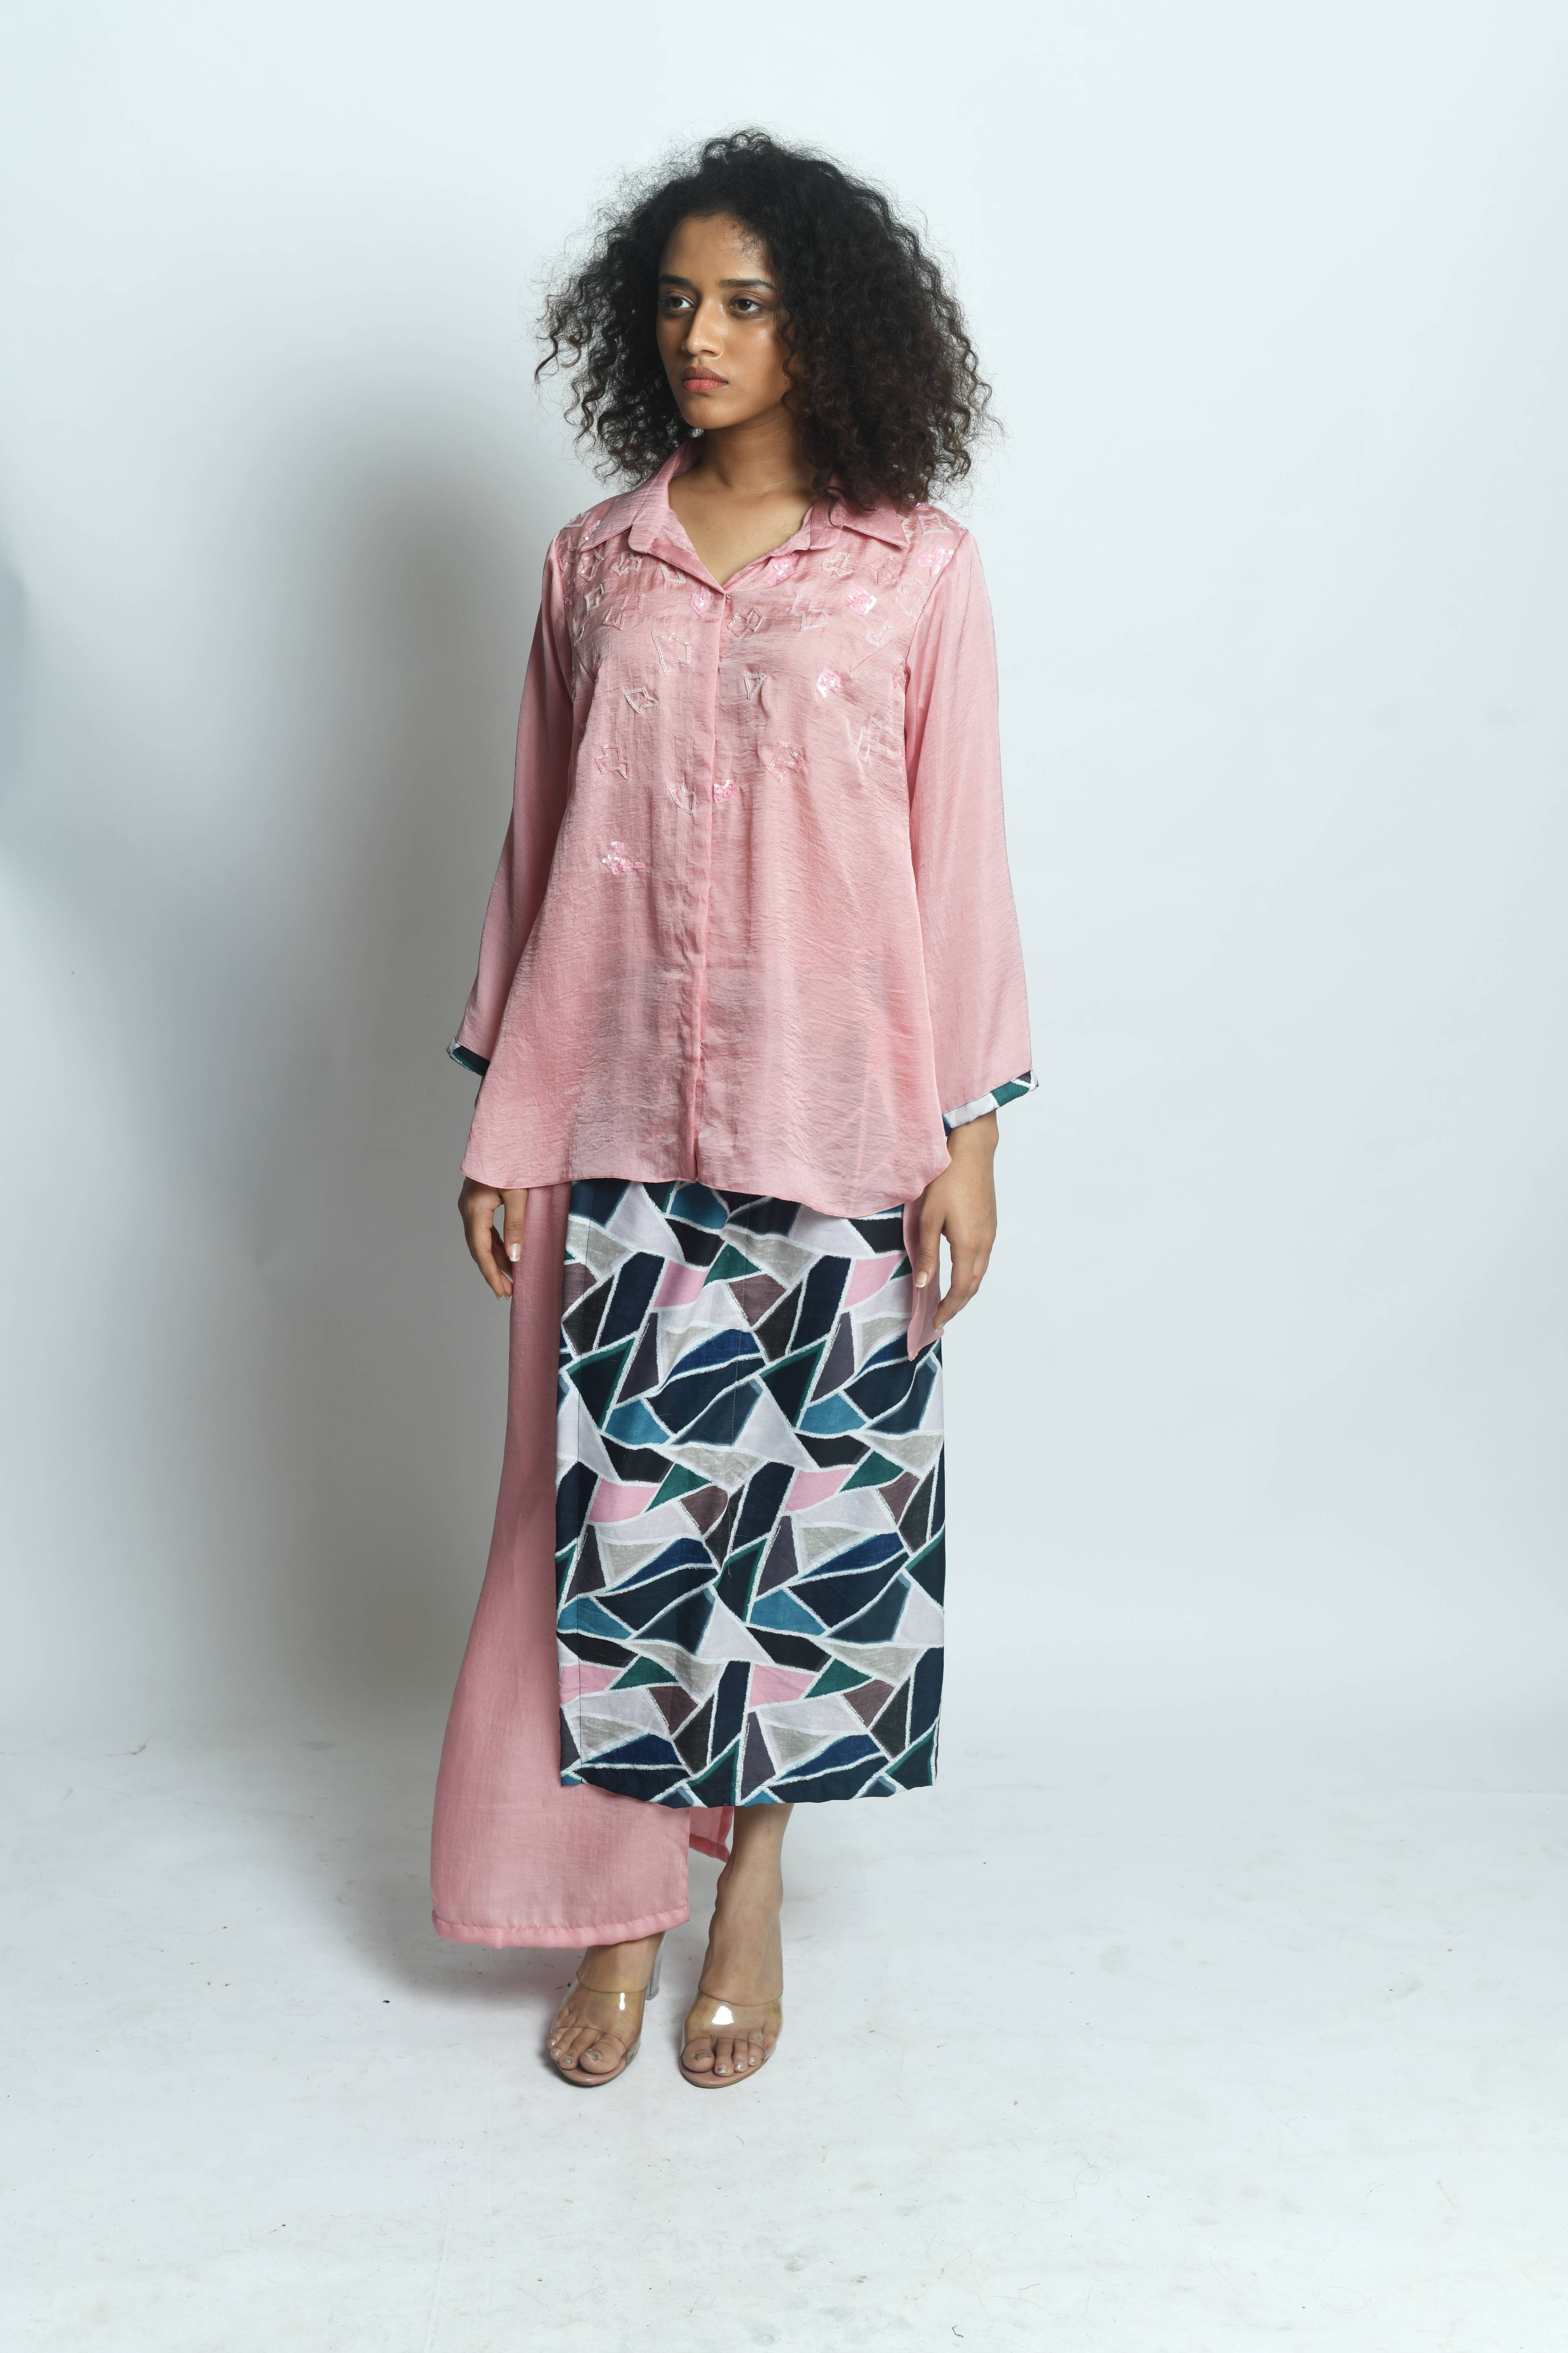 Stylish High Low Shirt with Straight Geometric Printed Skirt -1483